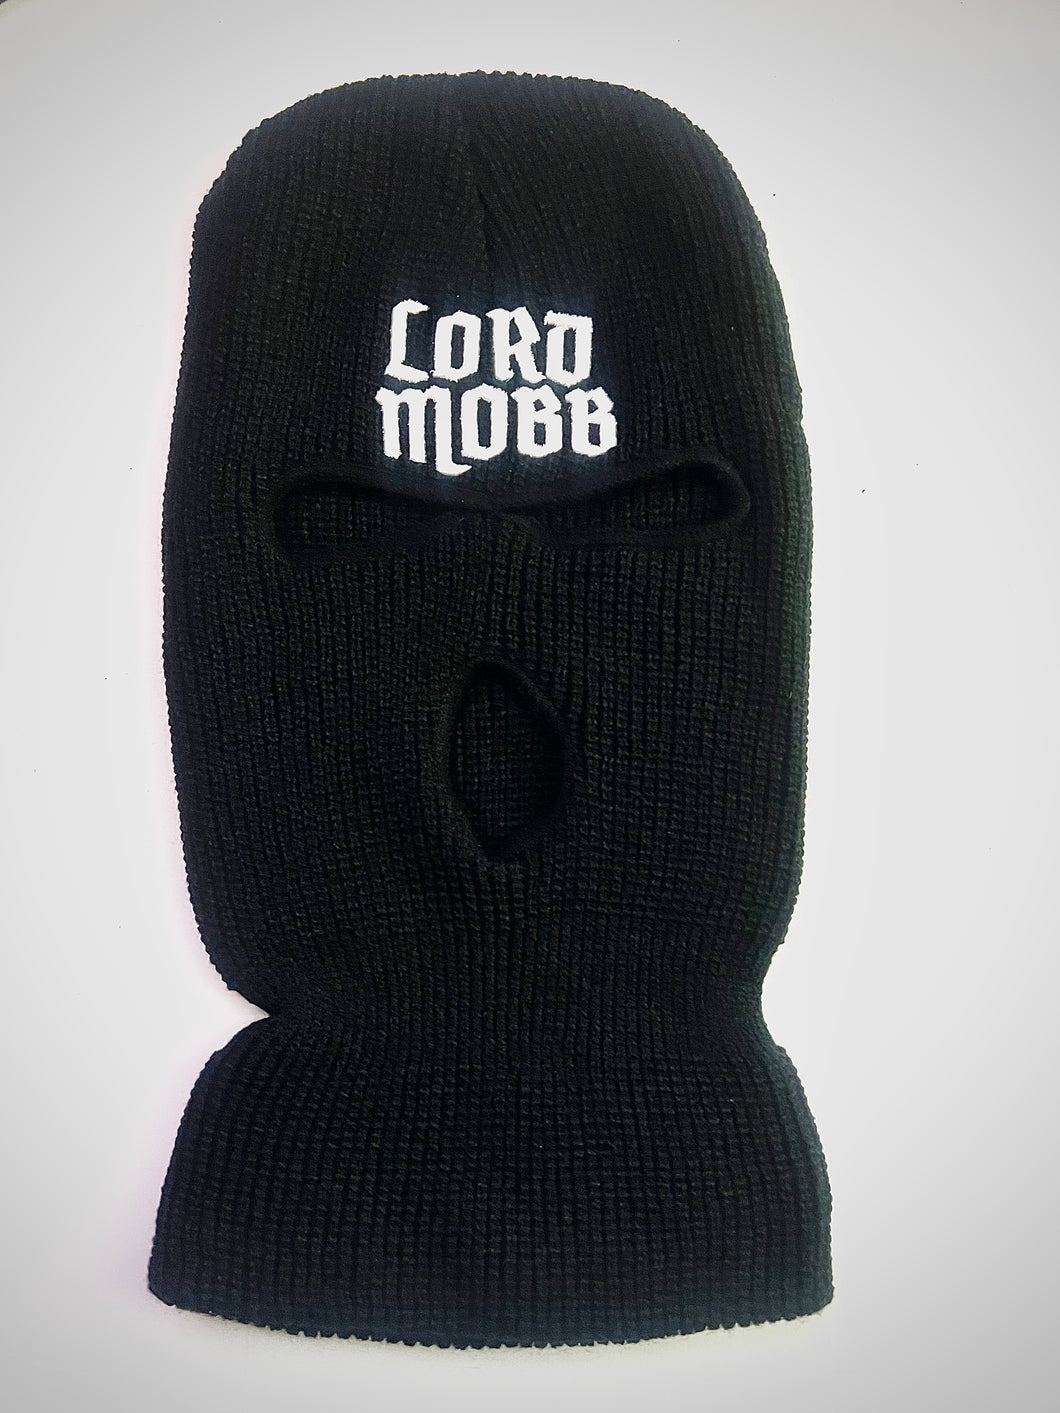 LordMobb Ski Mask